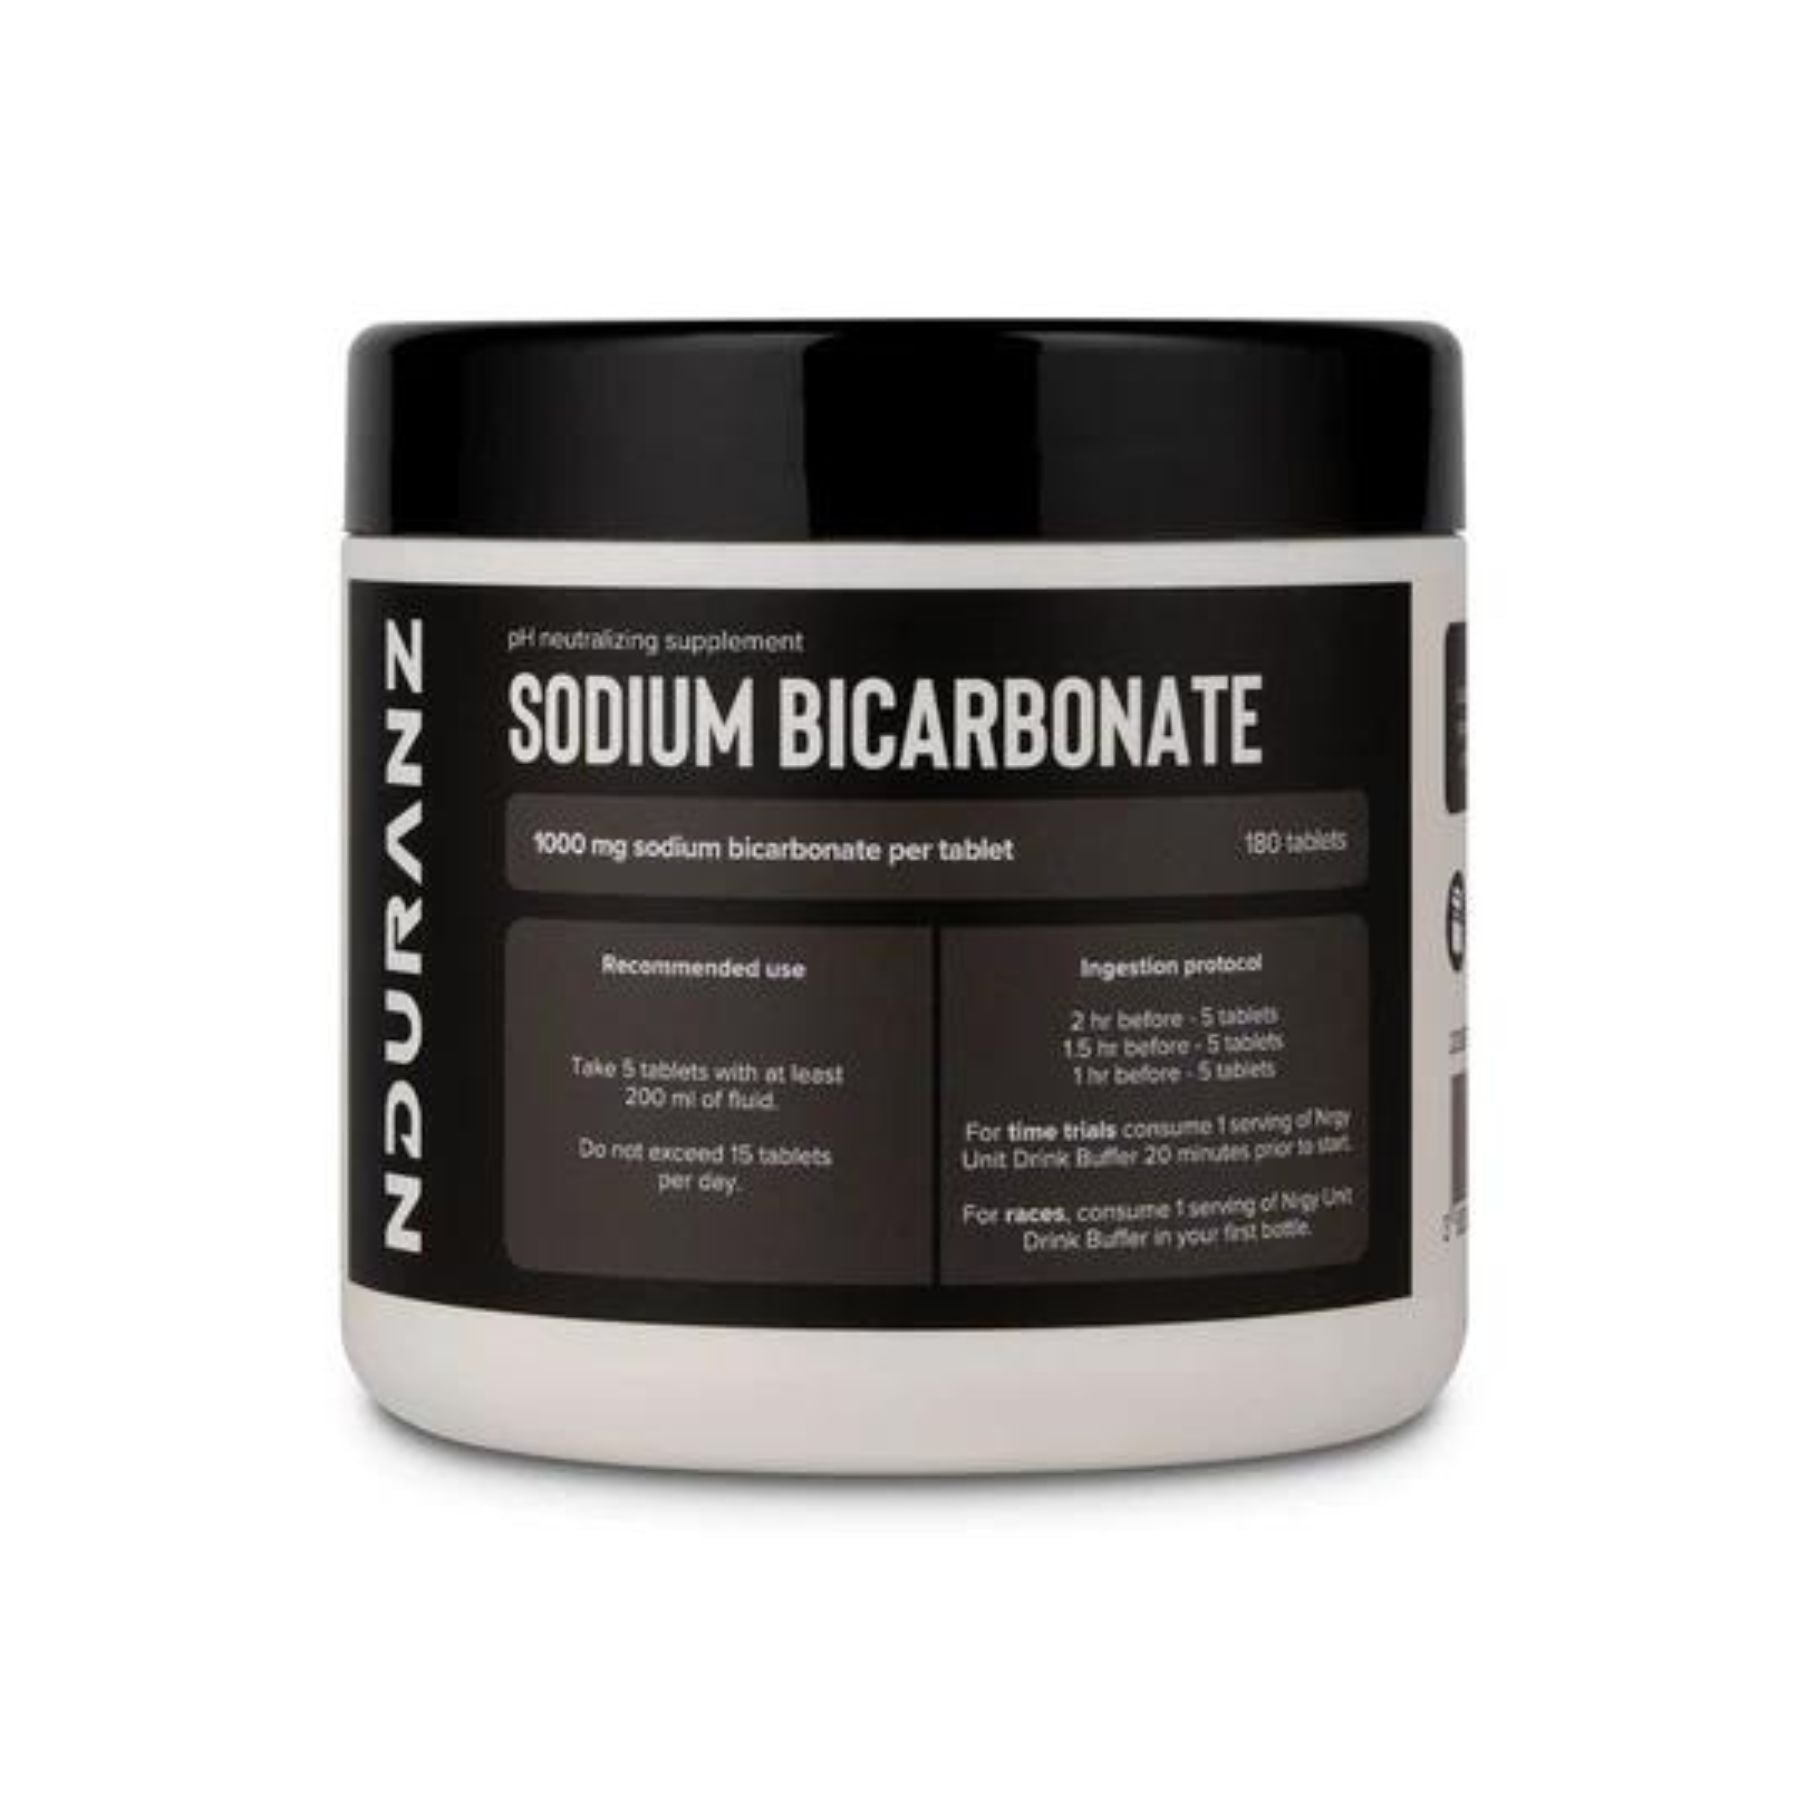 Sodium Bicarbonate - 180 Tablets